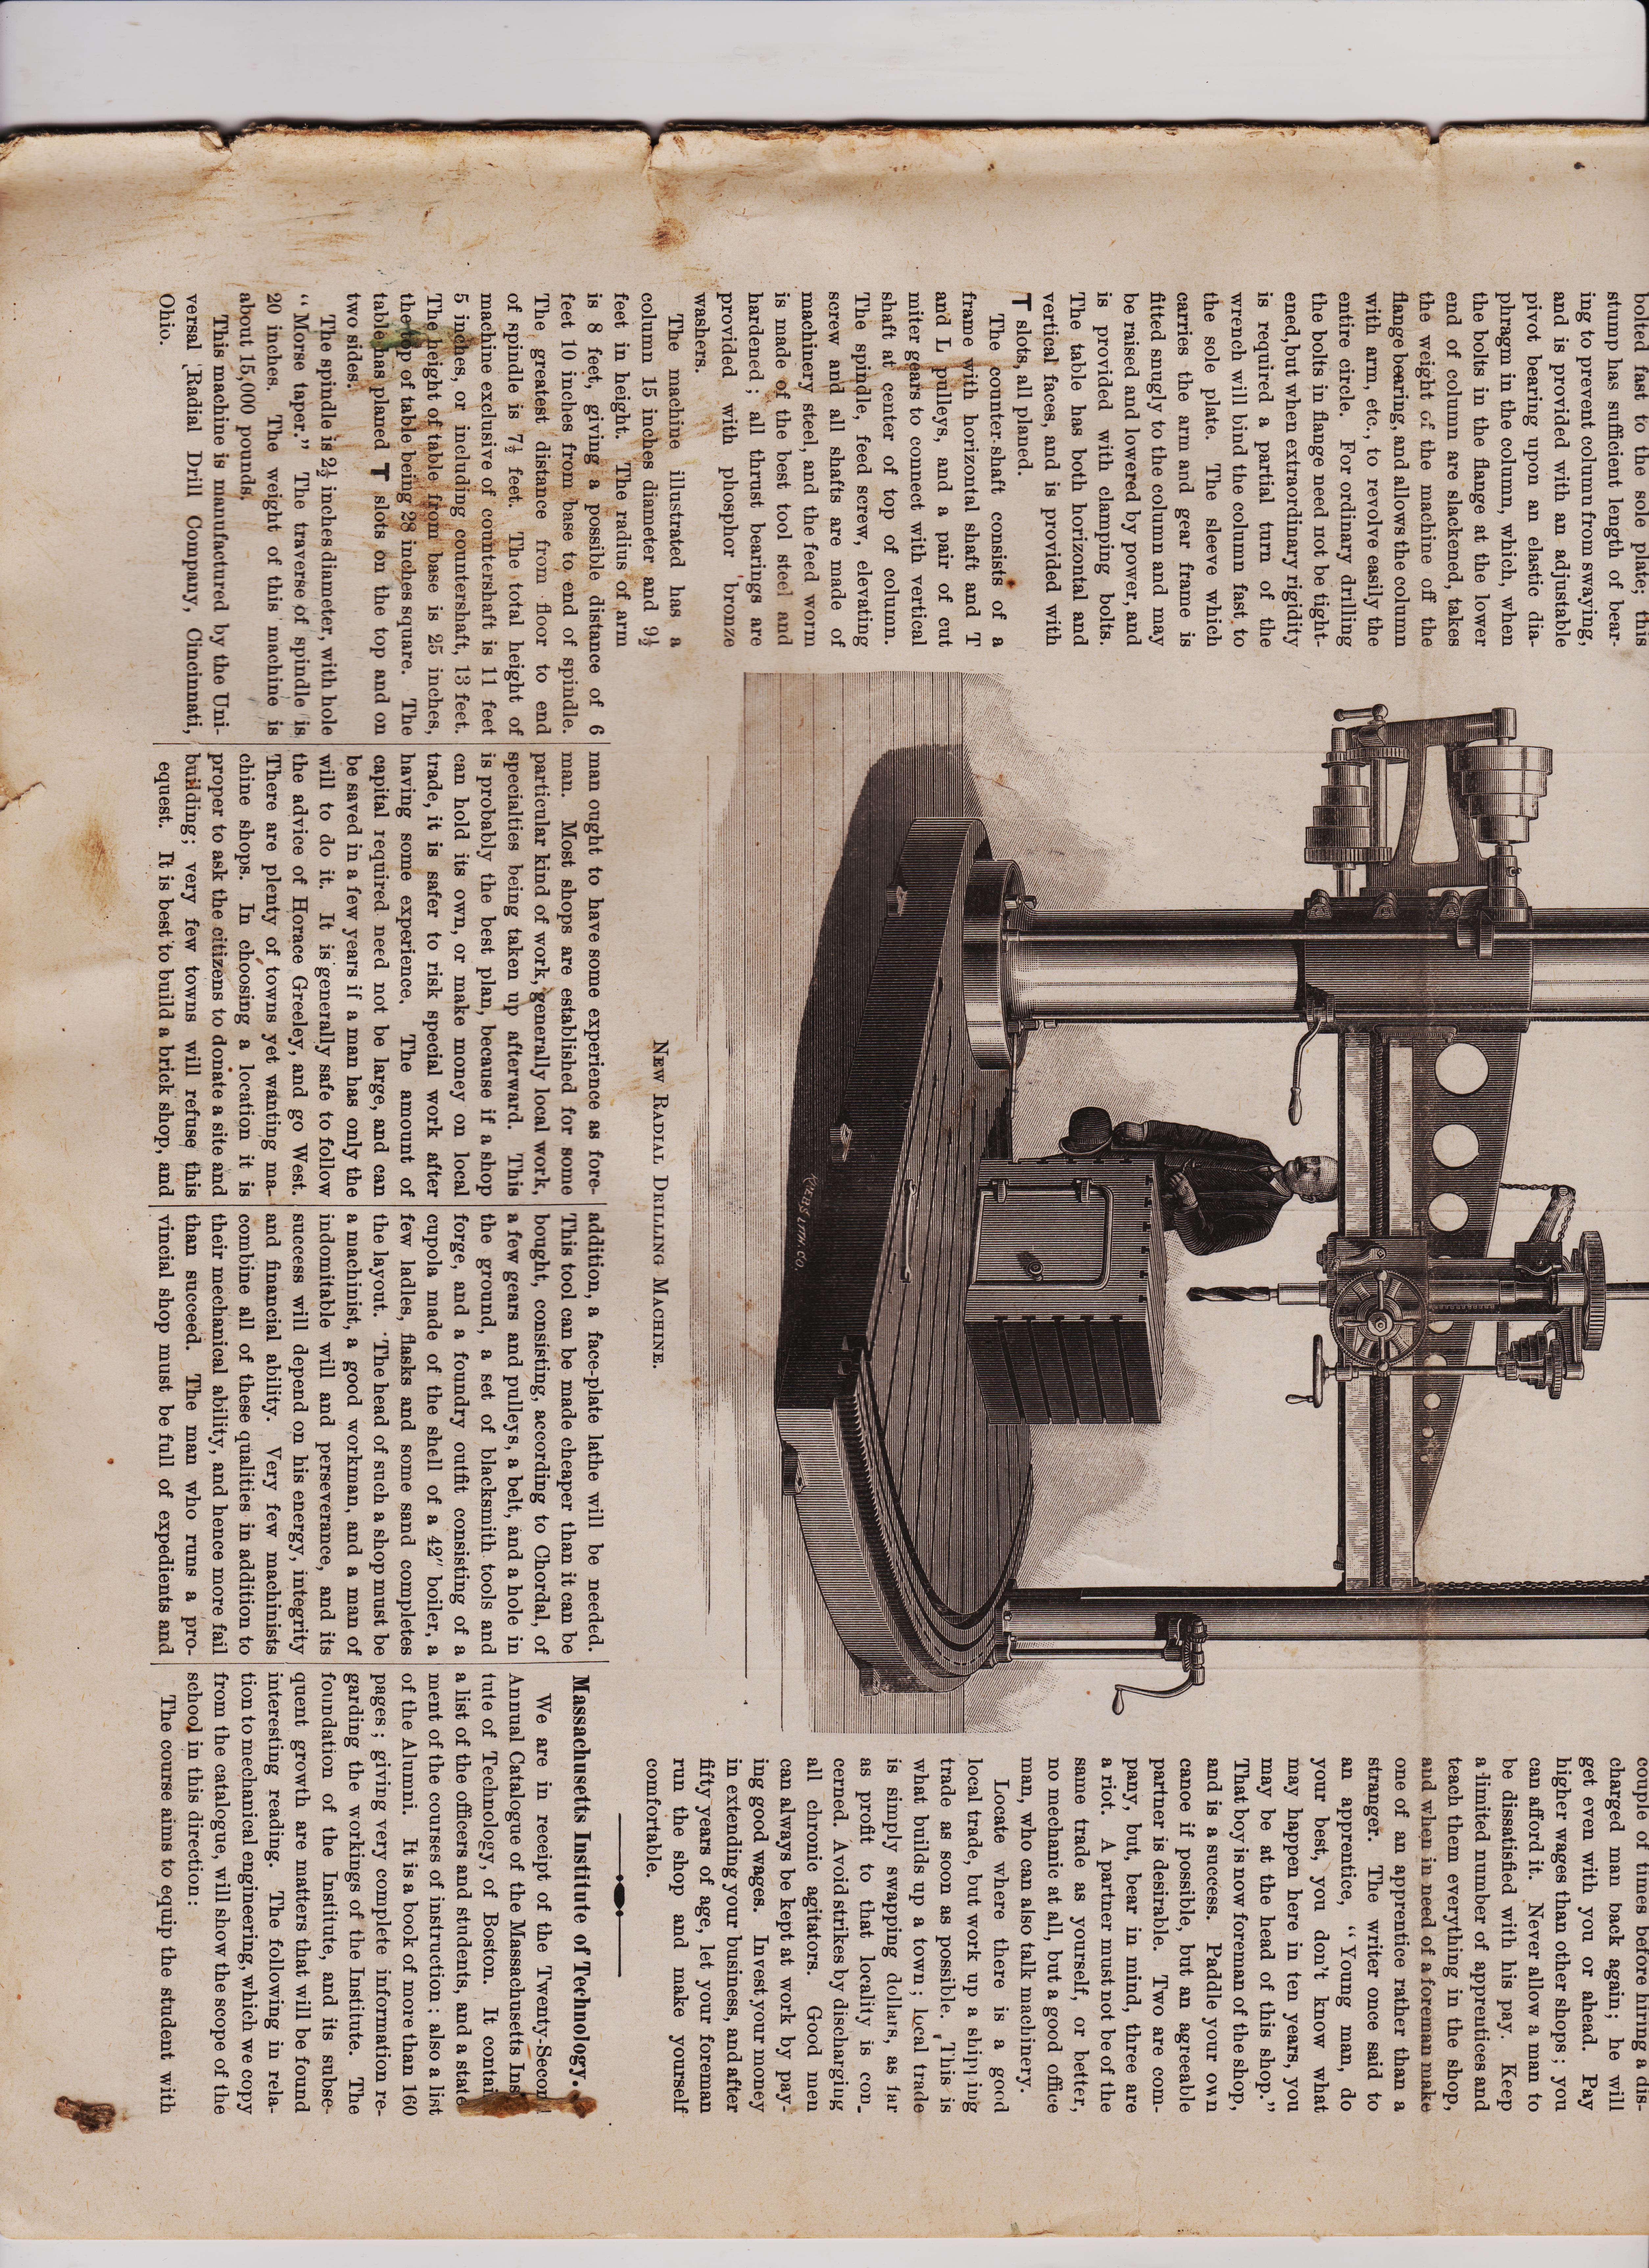 https://antiquemachinery.com/images-American-Machinist-Jan-22-1887/American-Machinist-Jan-15-1887-pg1-cover-bot-New-Radial-Drilling_Machine-Radial-Drill-Co-Cincinnati-Ohio-Starting-a-Machine-Shop-Massachusetts-Institute-of-Technology.jpeg